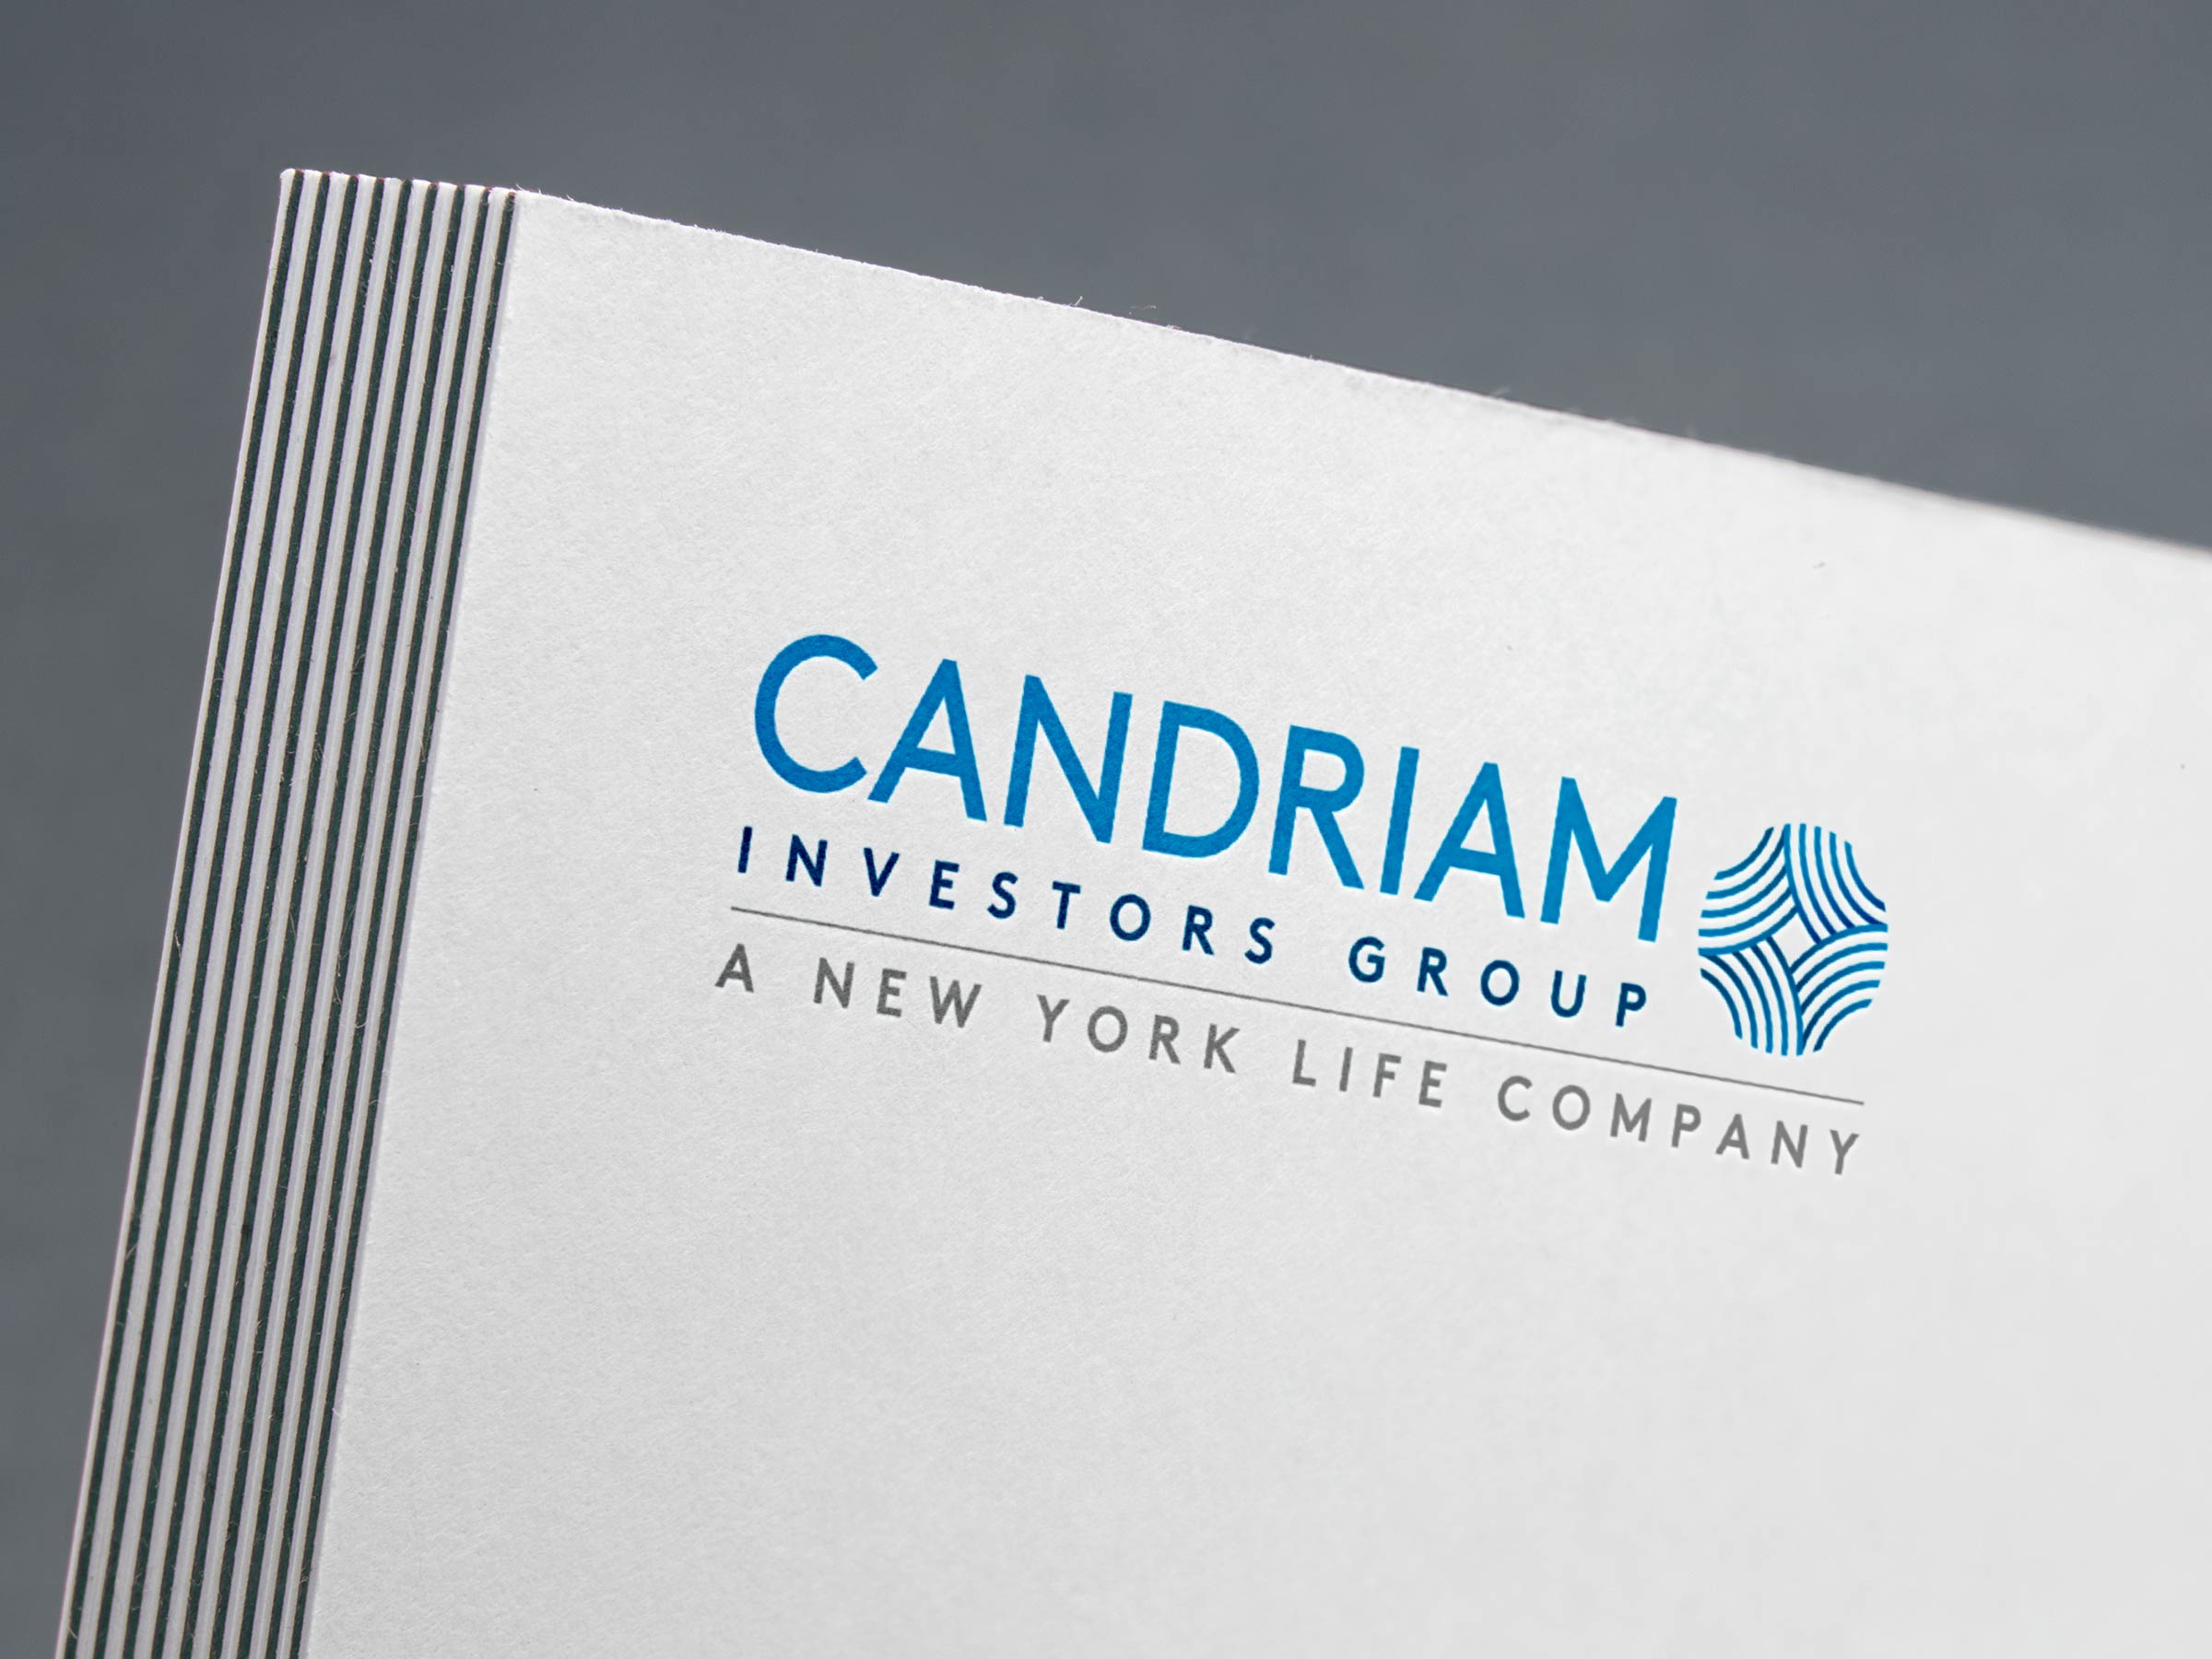 financialounge -  Candriam finanza Naim Abou Jaoudé new york life investment management Vincent Hamelink